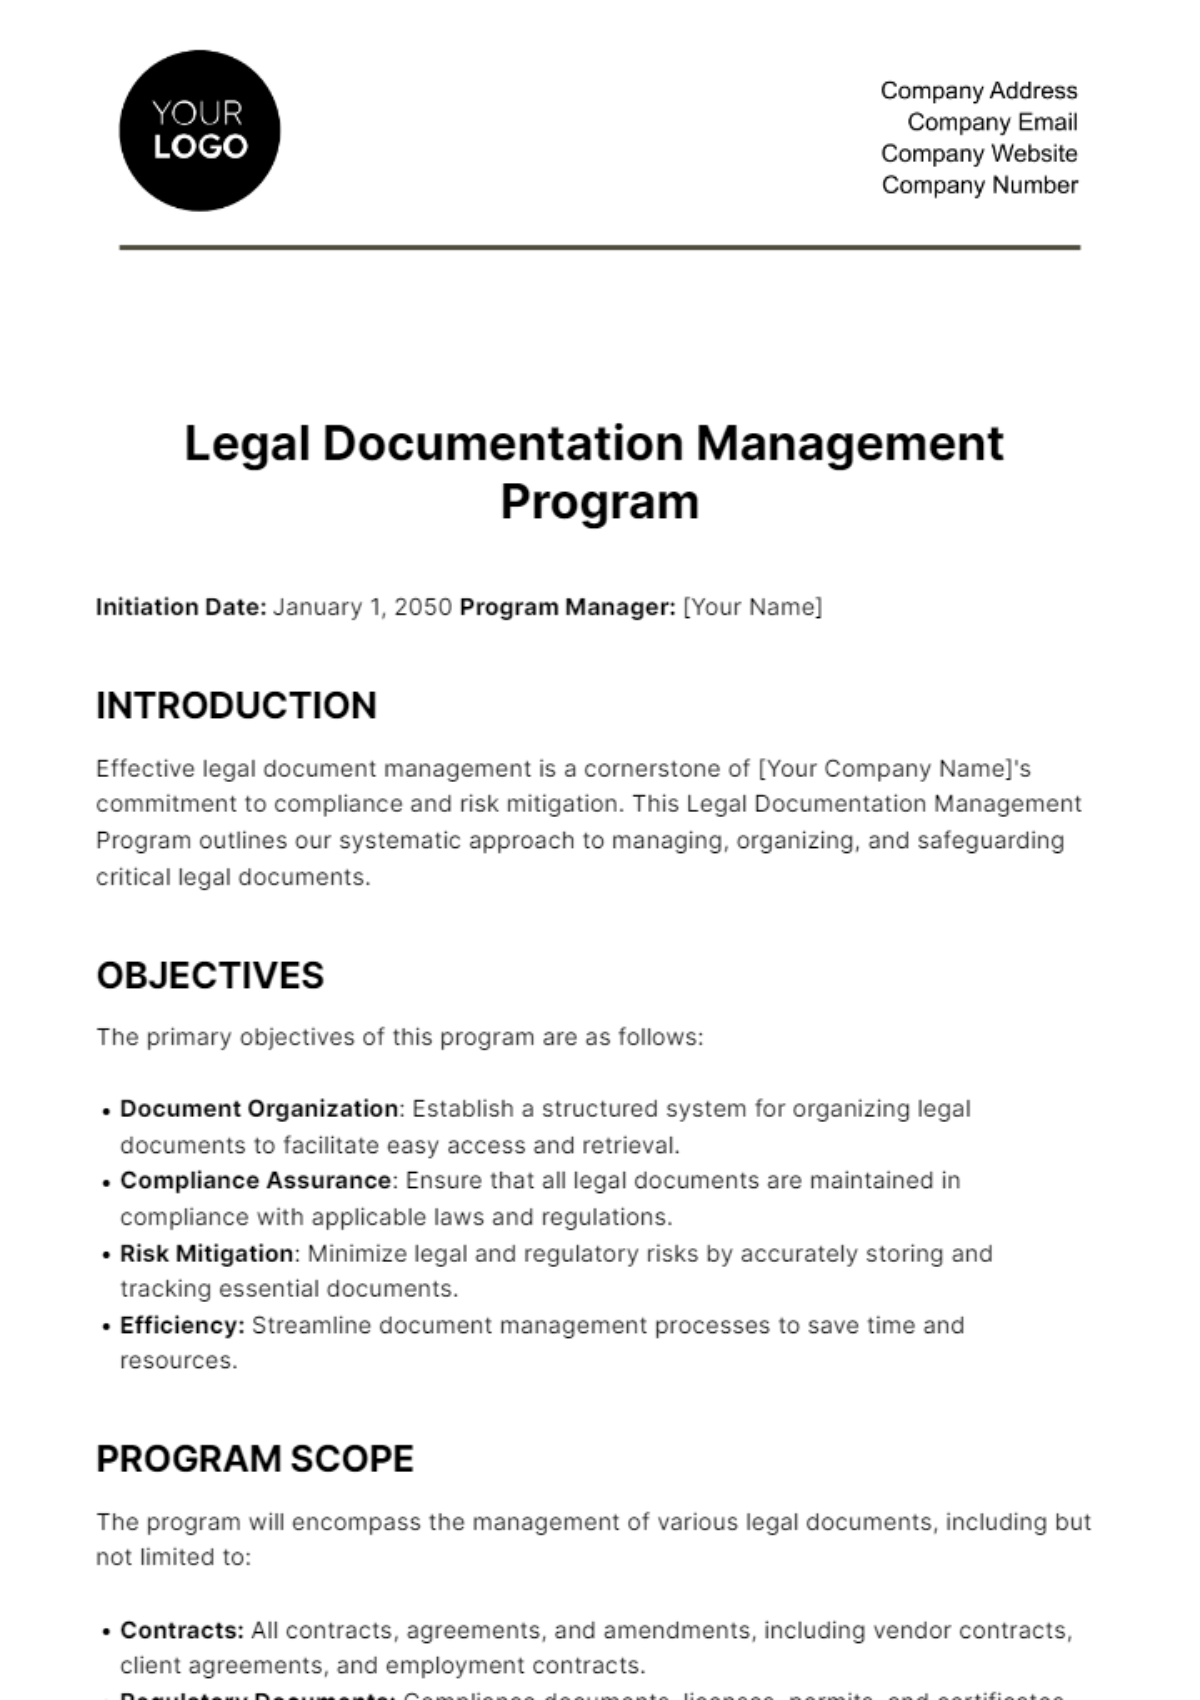 Legal Documentation Management Program HR Template